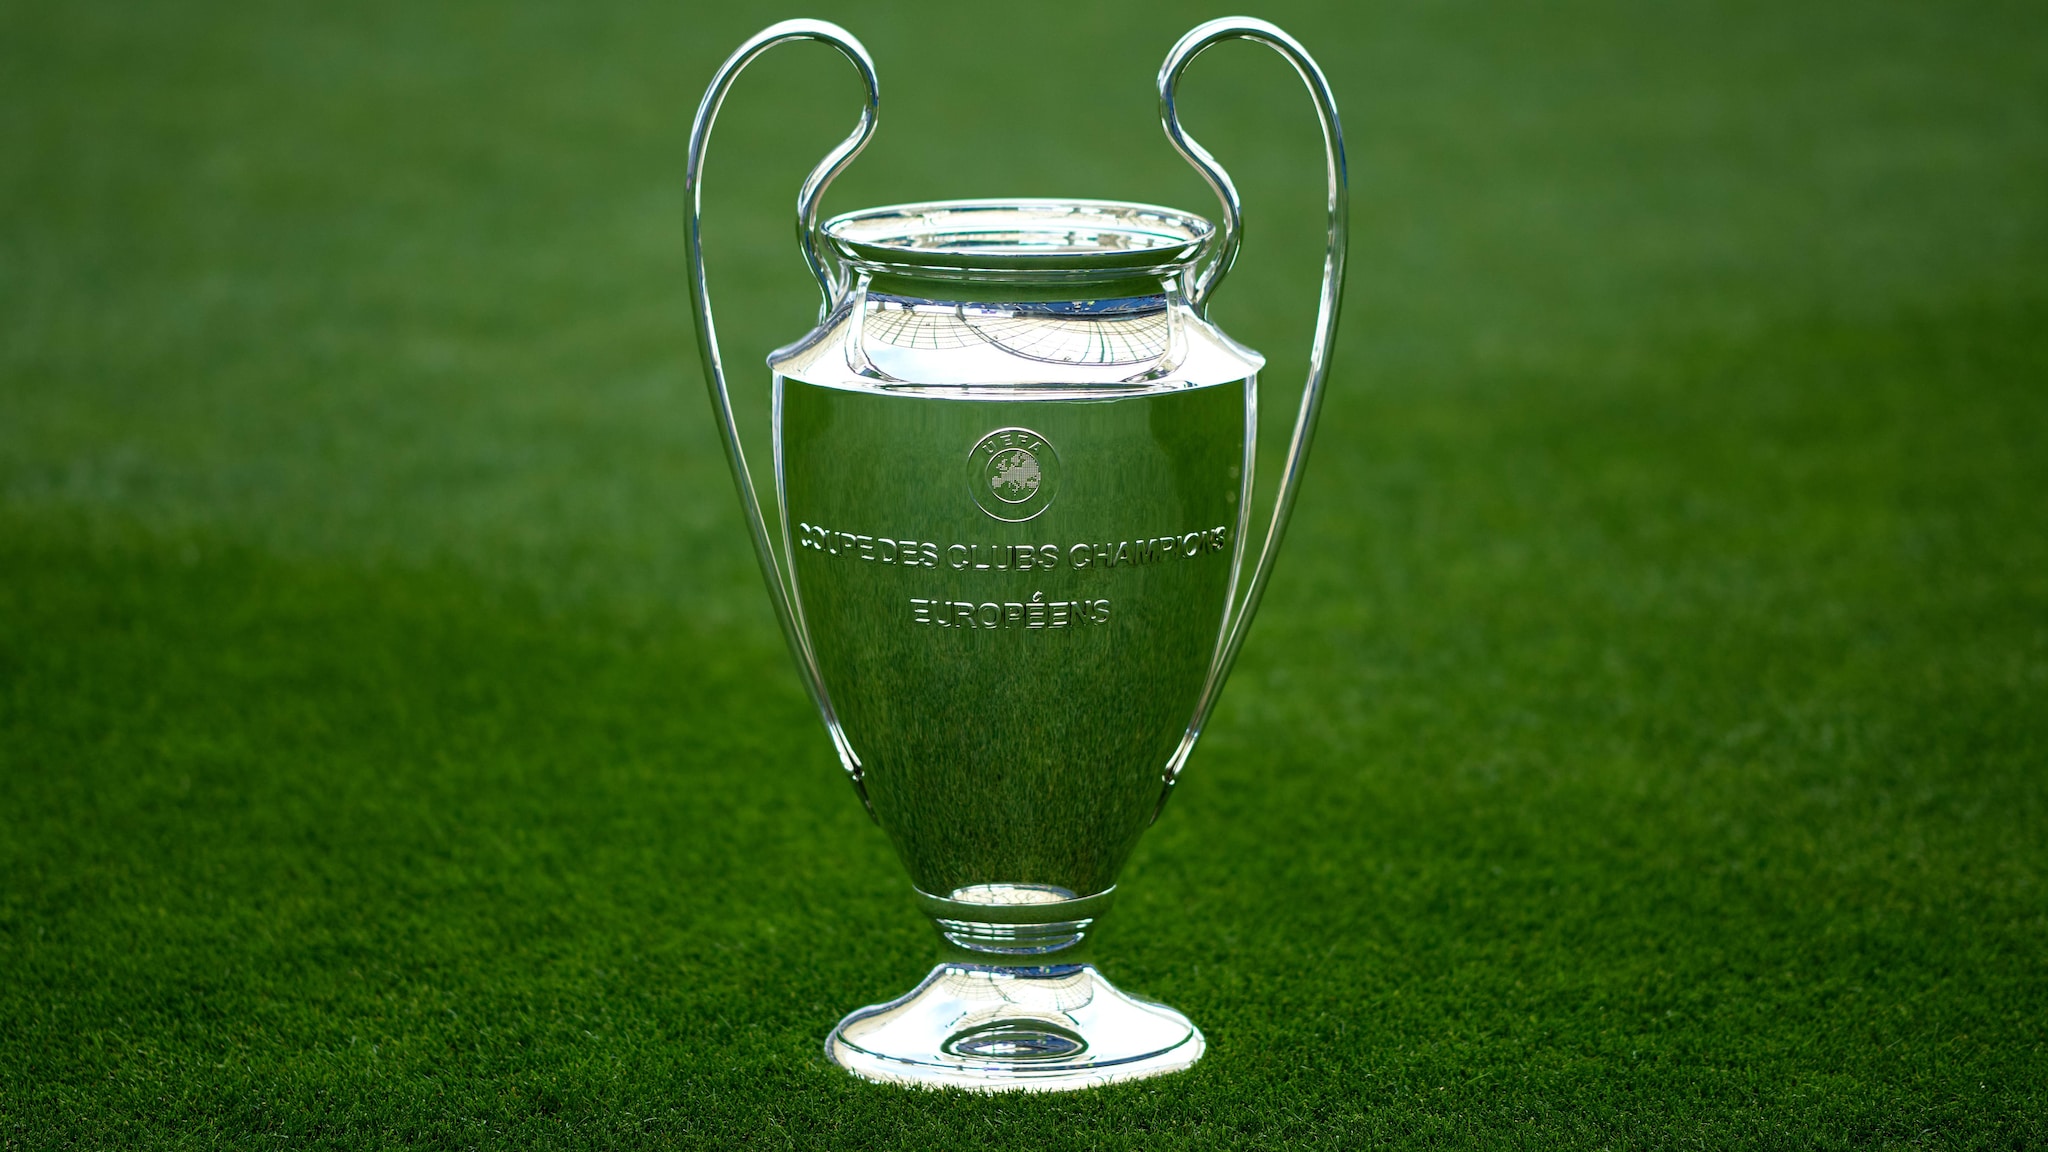 2022/23 UEFA Champions League: Matches, draws, final | UEFA ...